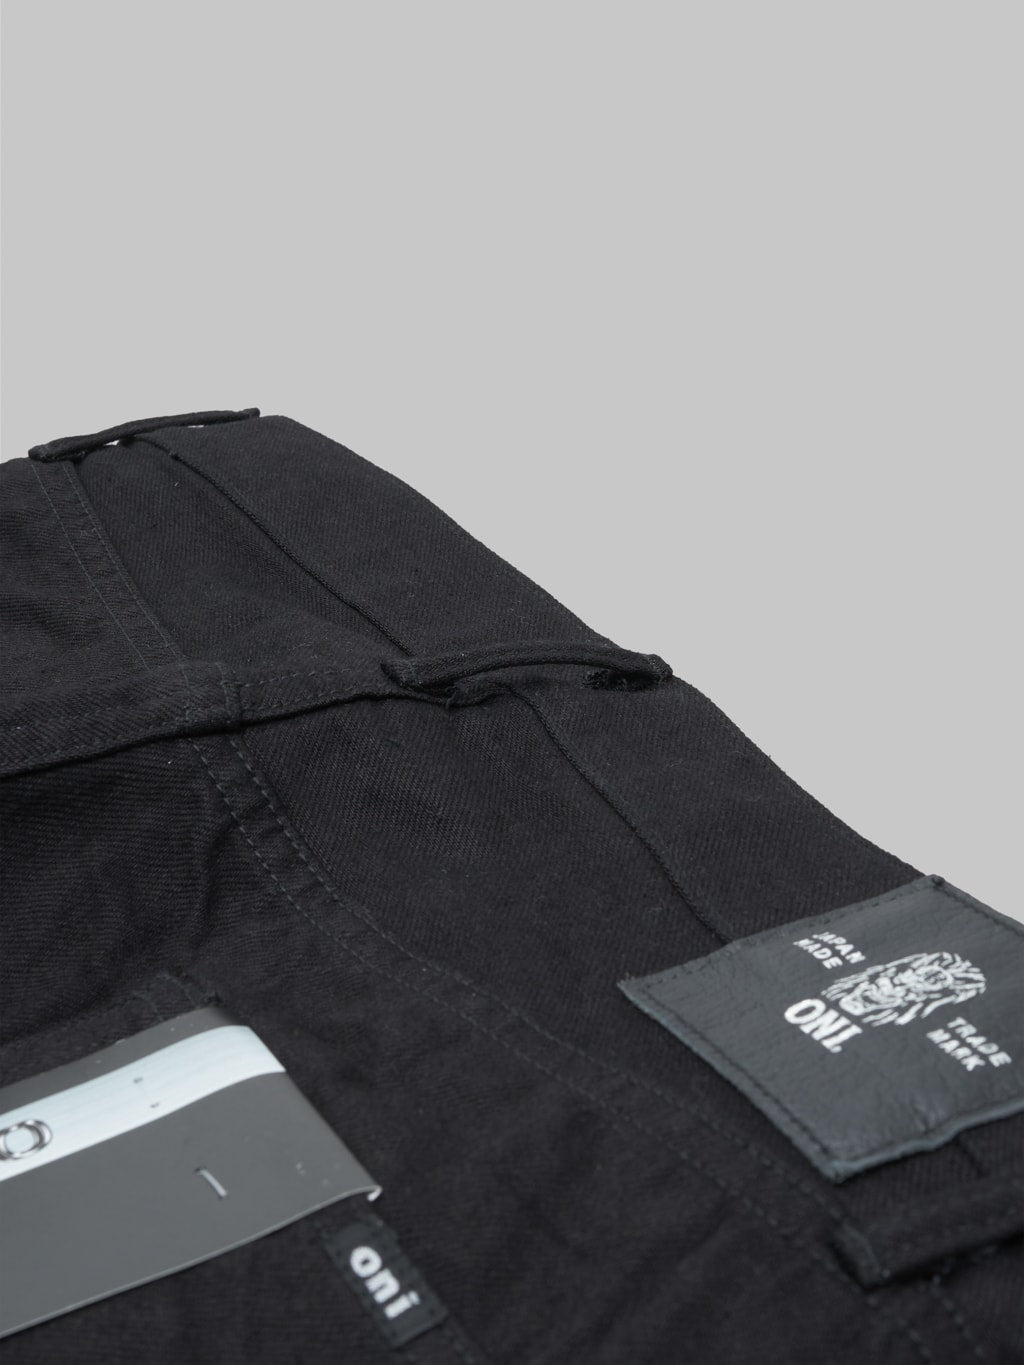 ONI Denim 242-13BK "Jet Black Denim" 13oz Super Wide Straight Jeans